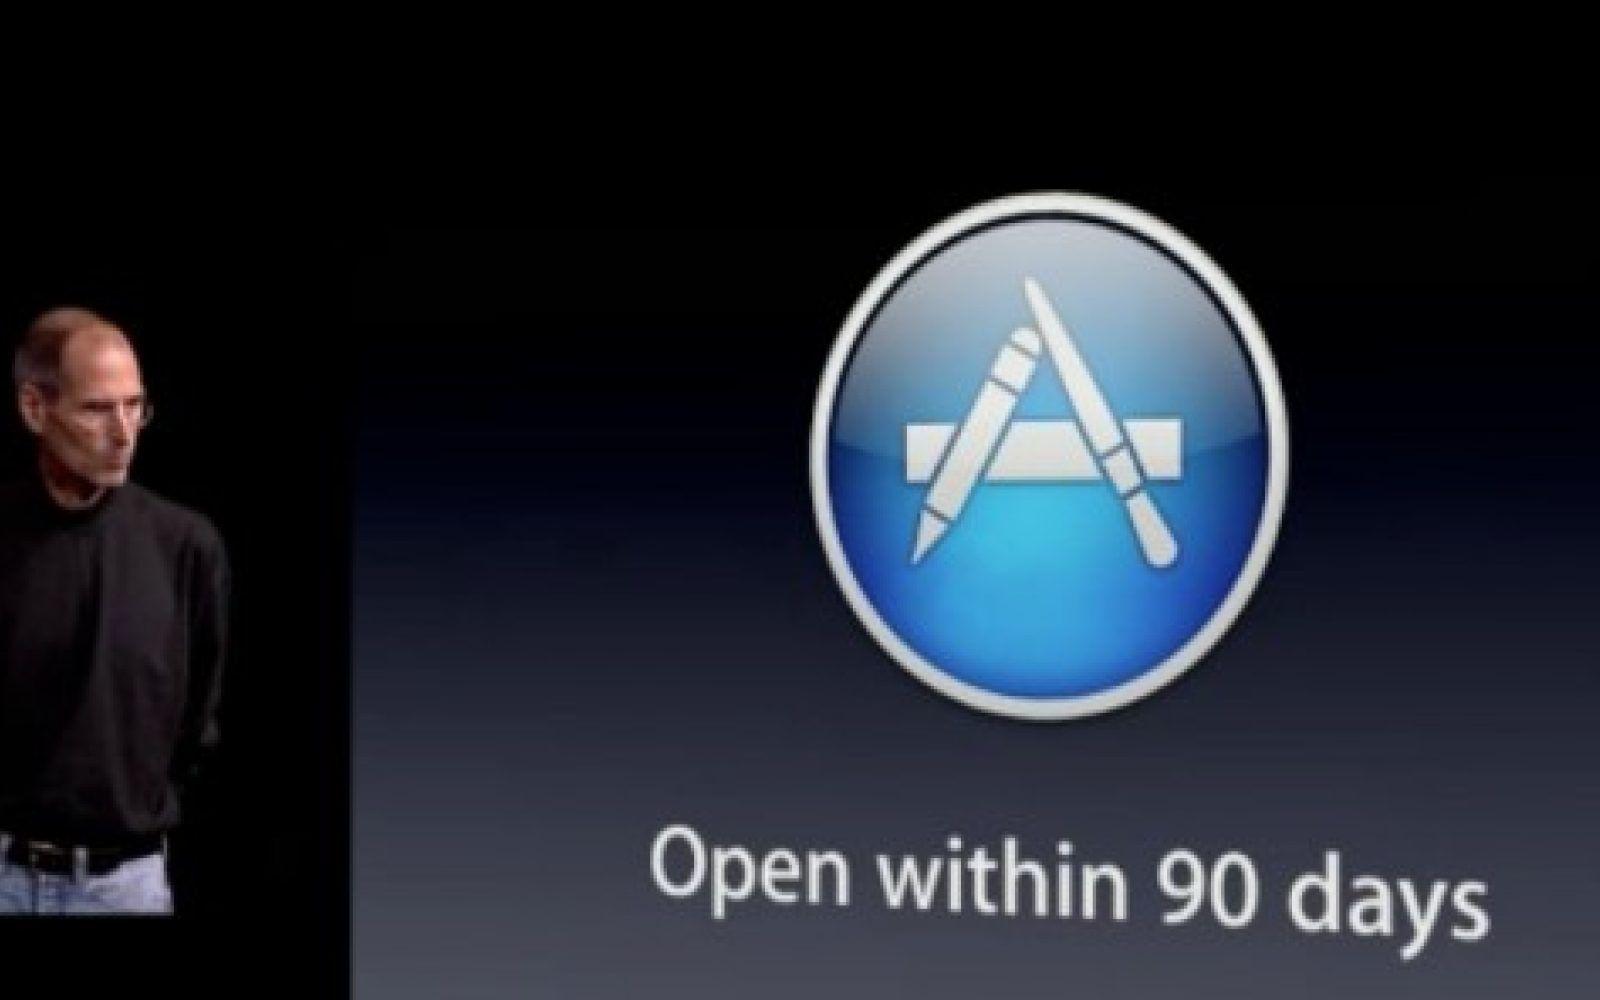 Steve Jobs App Store Logo - Mac App Store coming when Steve Jobs said it would come - 9to5Mac